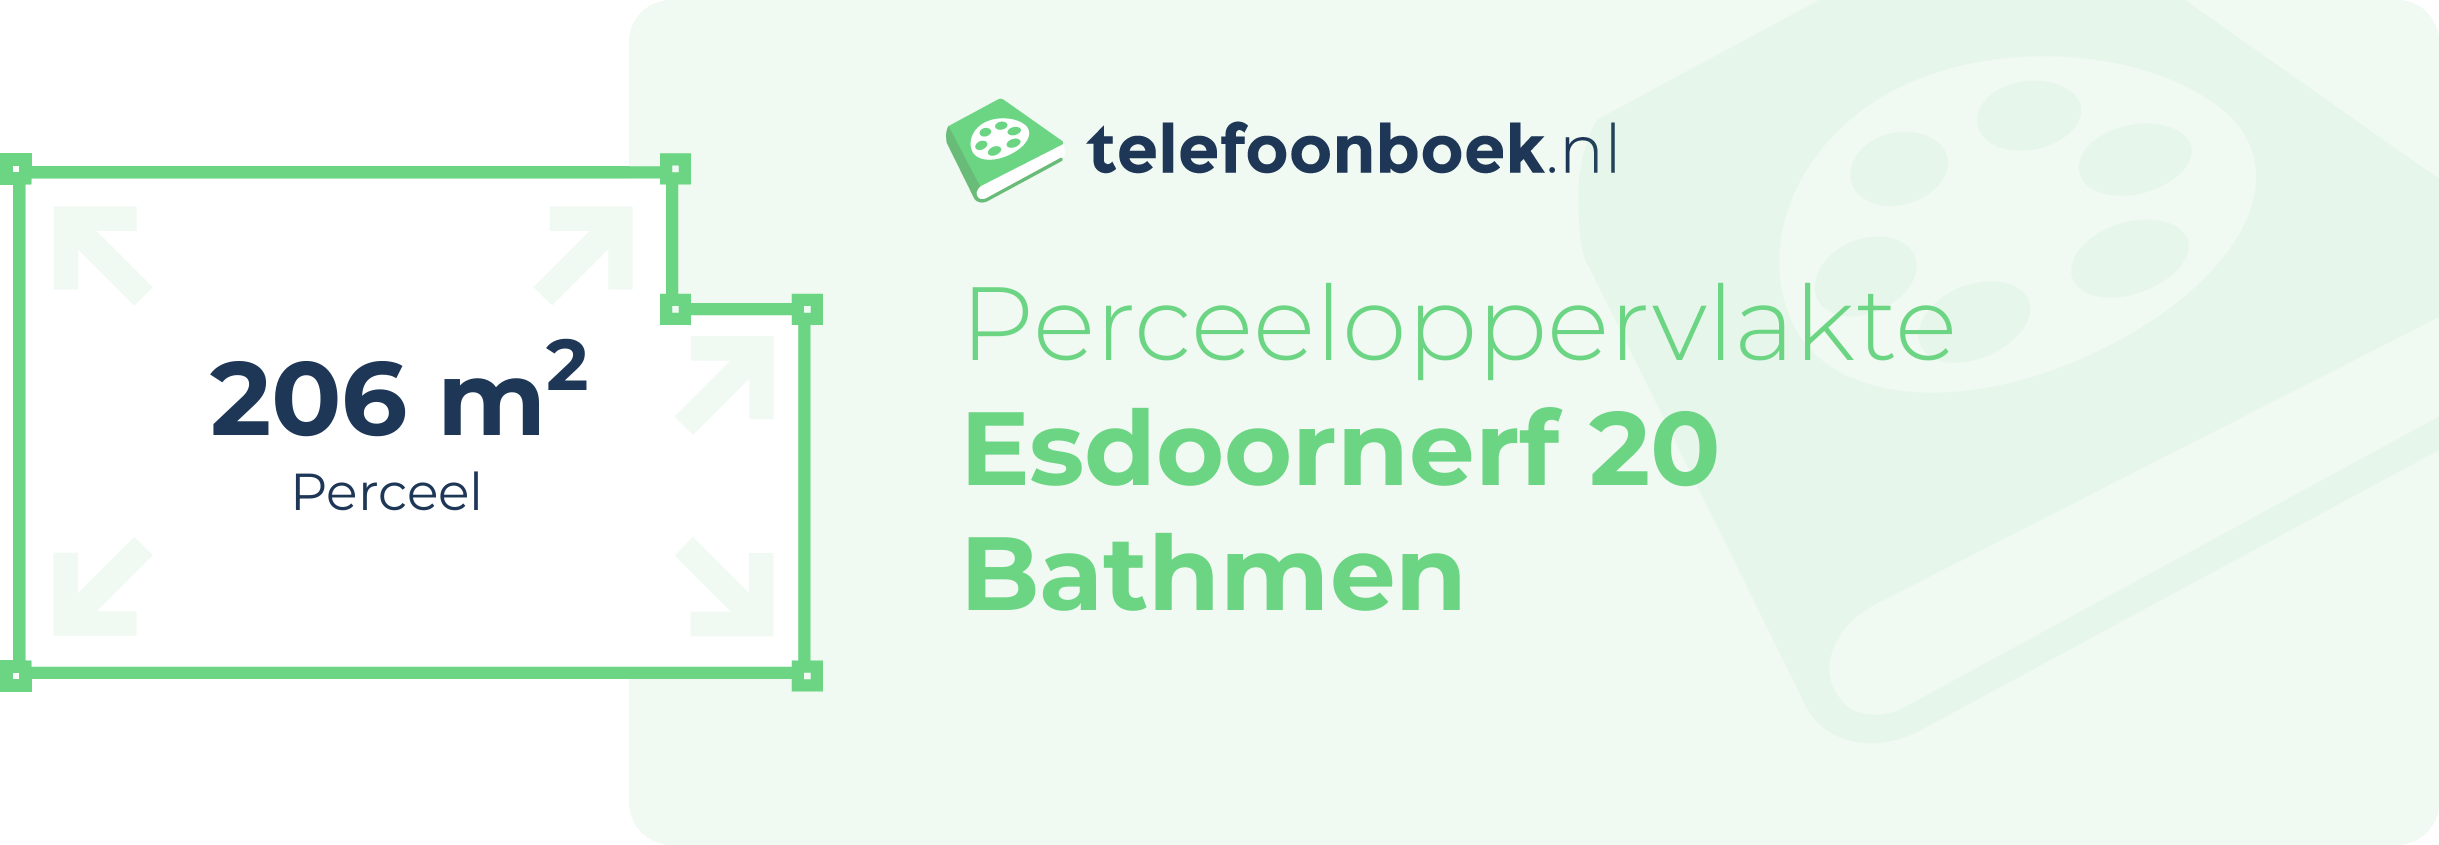 Perceeloppervlakte Esdoornerf 20 Bathmen